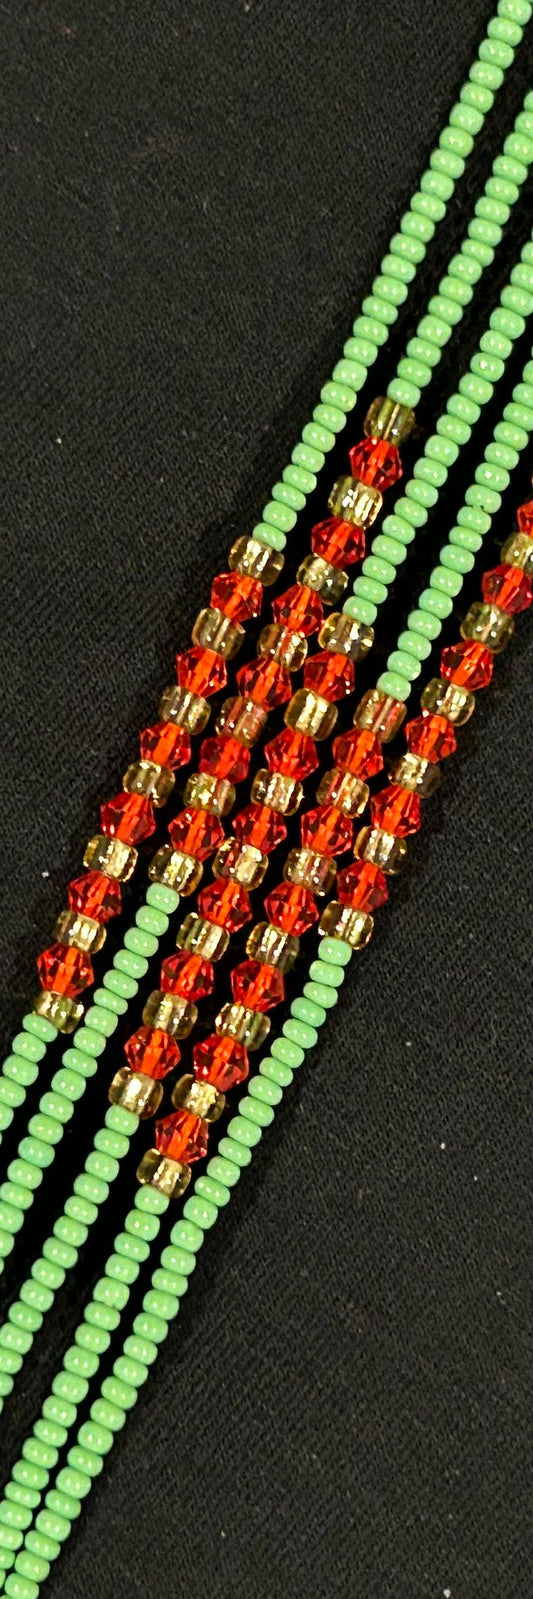 Mint Condition-Waist Beads